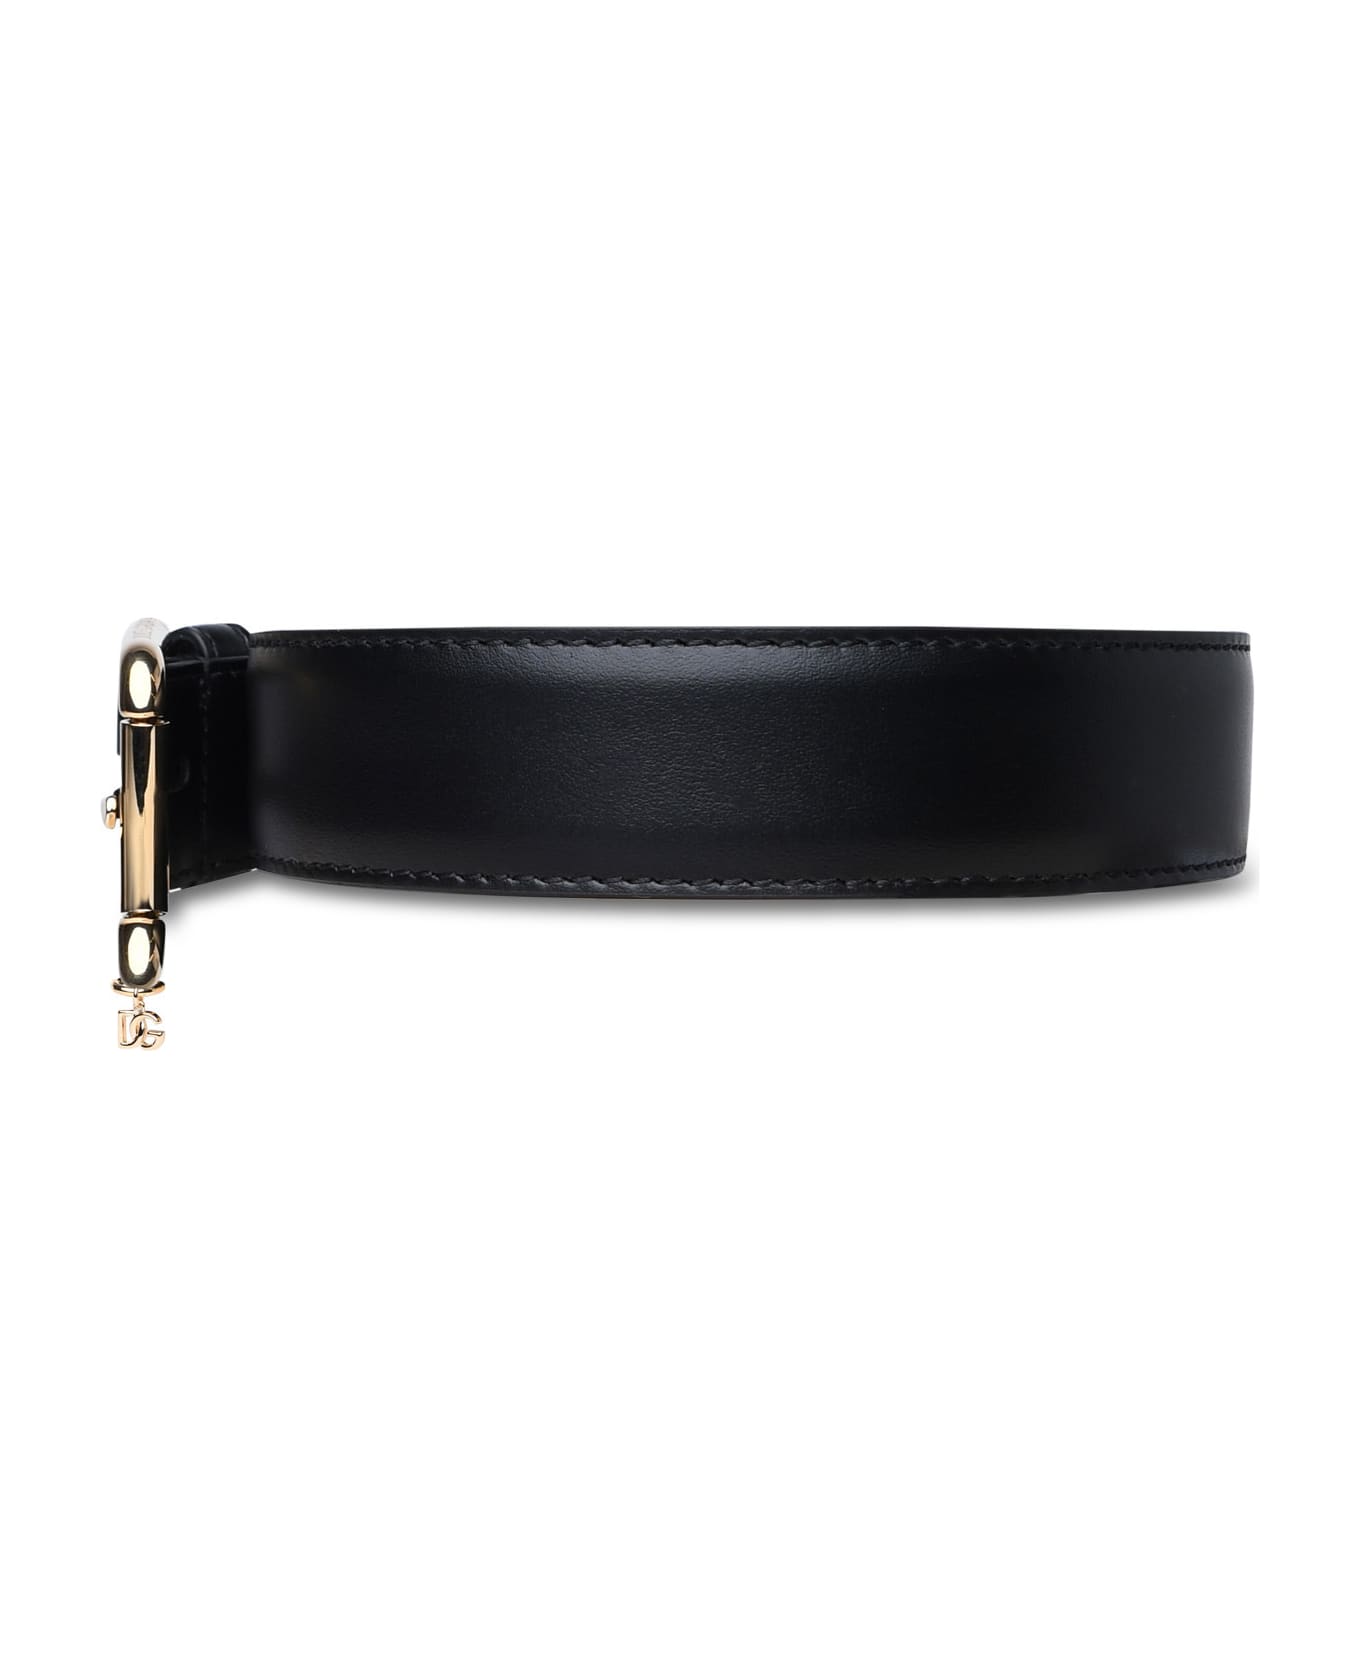 Dolce & Gabbana Black Leather Belt - Black